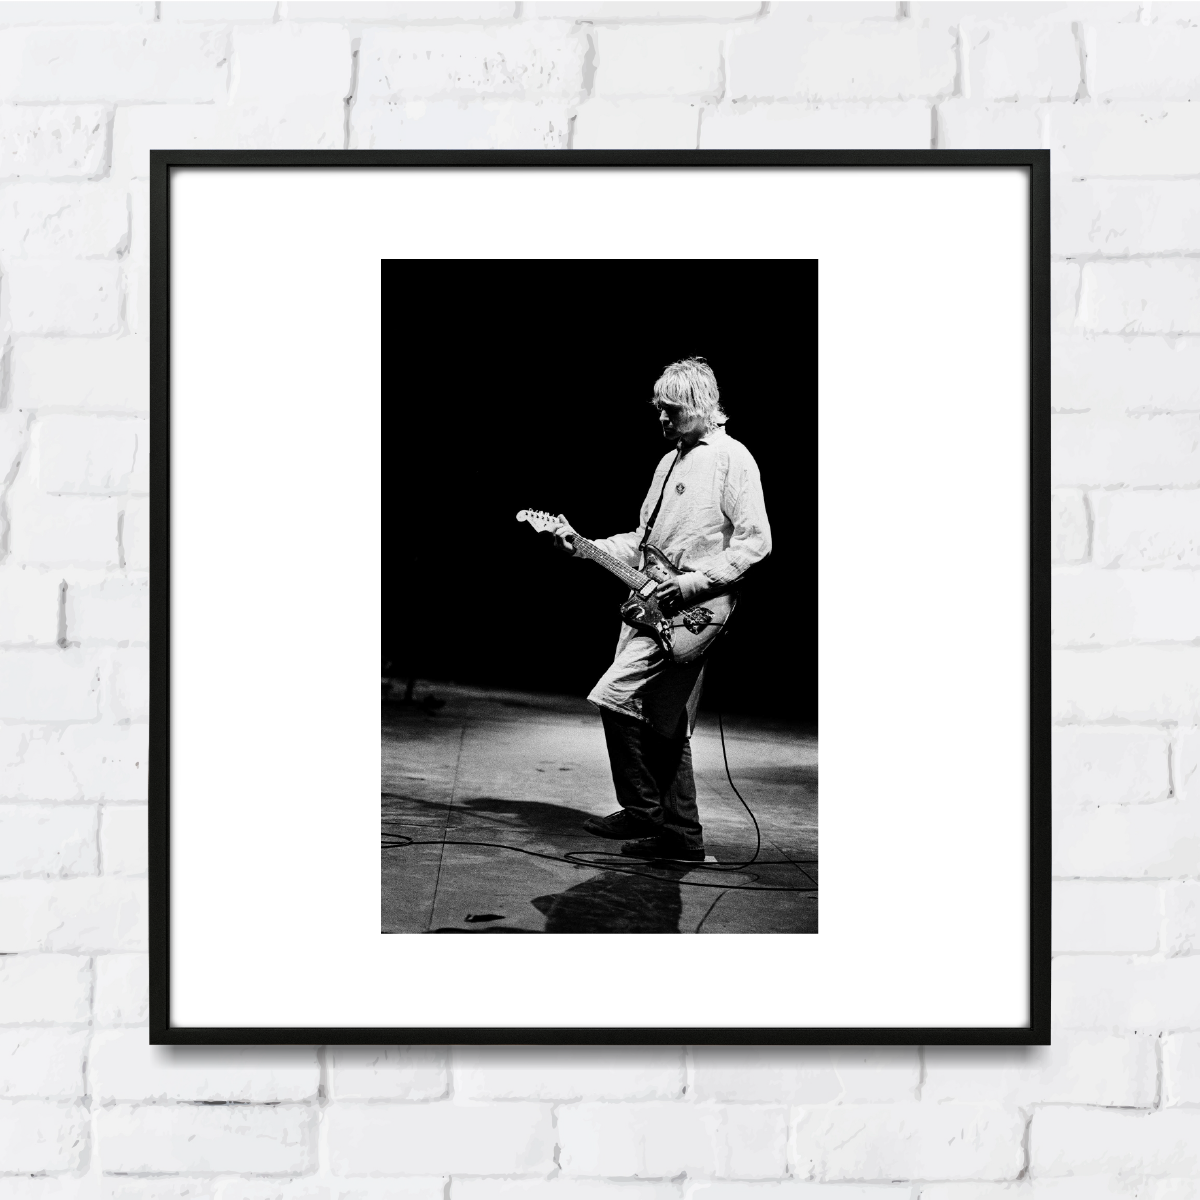 kurt cobain, reading festival, u.k. - 8/30/92  - 12 x 12 inch limited edition print